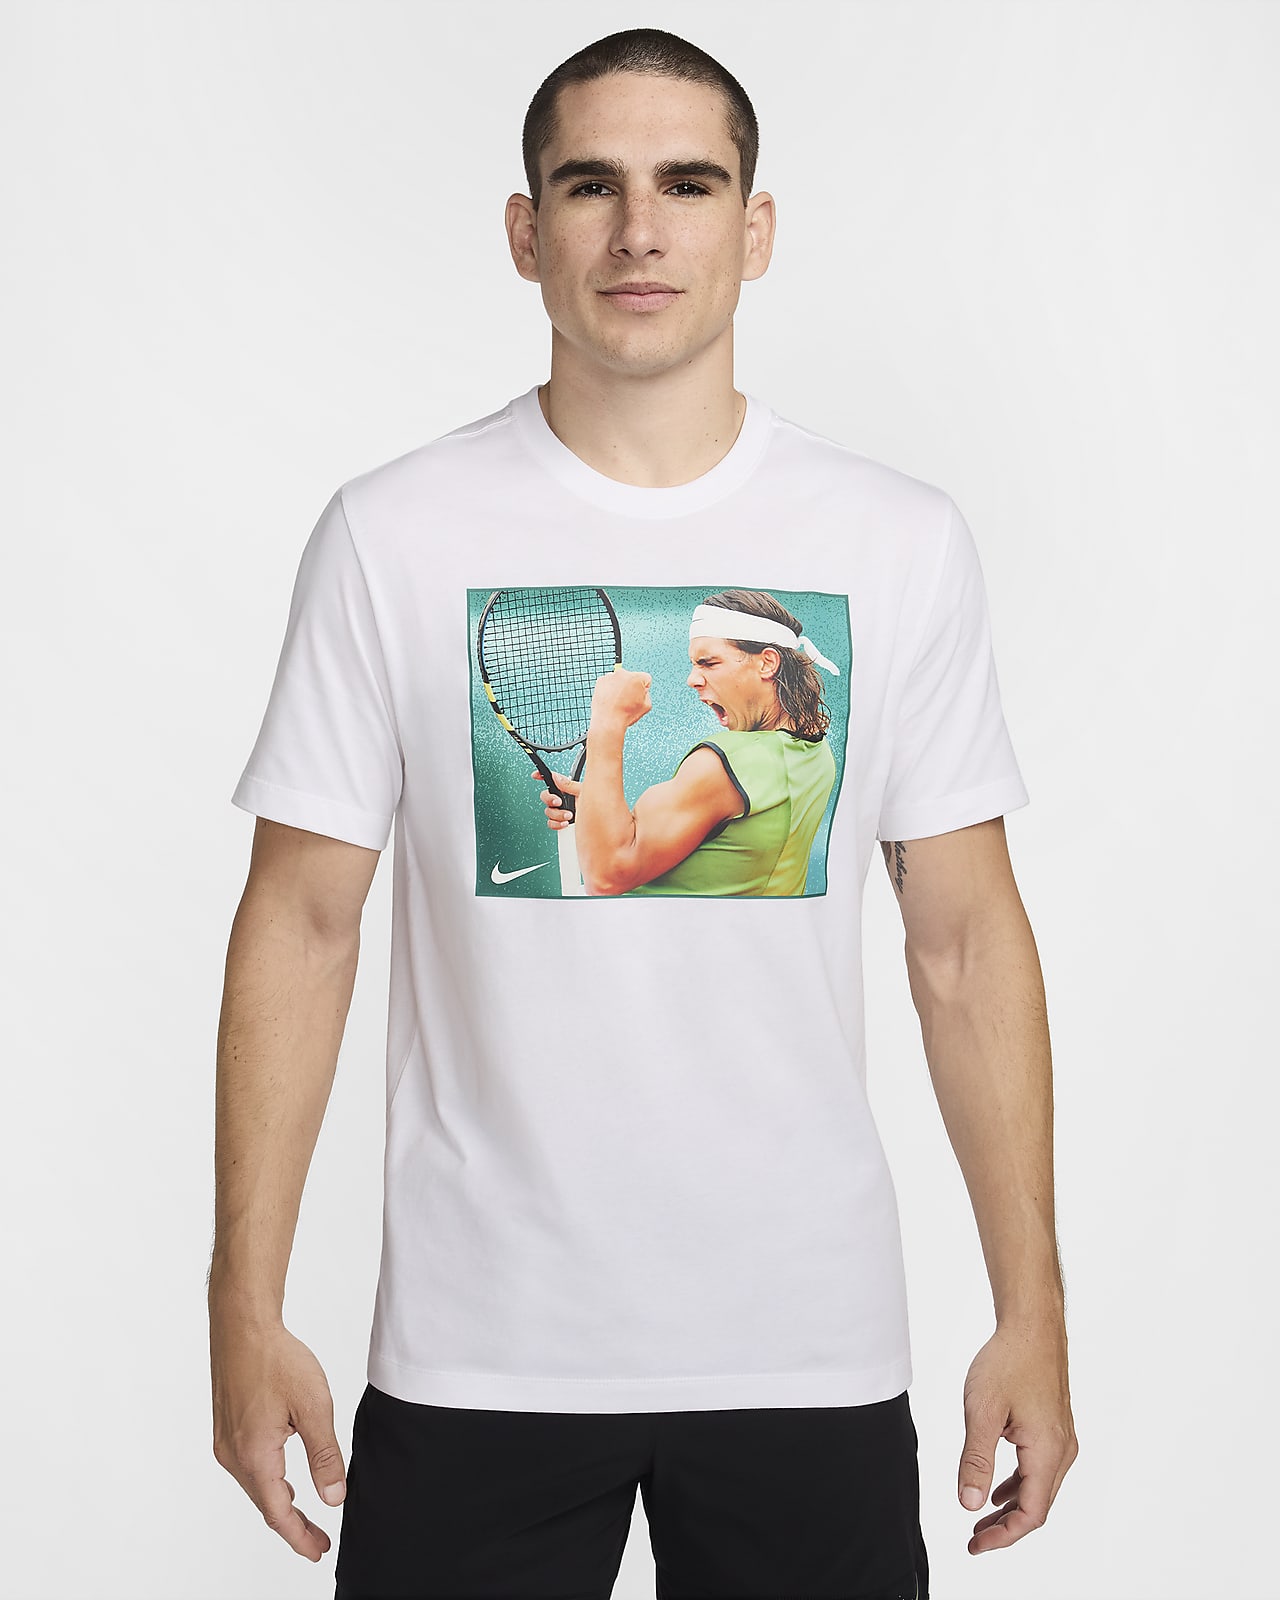 Rafa Men's Tennis T-Shirt